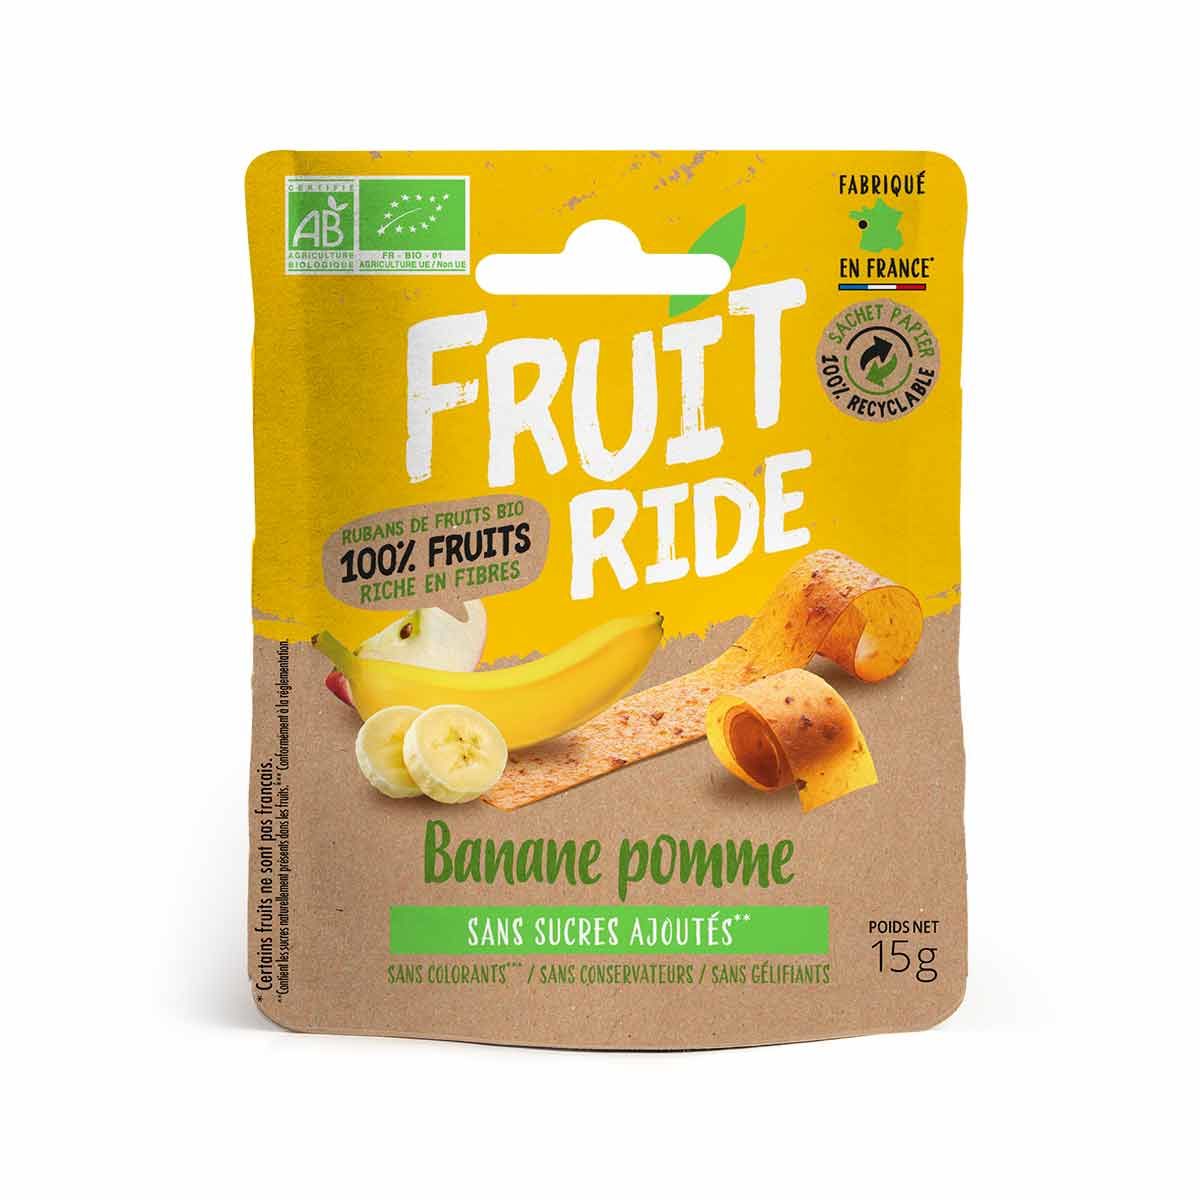 Fruit Ride organic fruit leather - Banana, apple